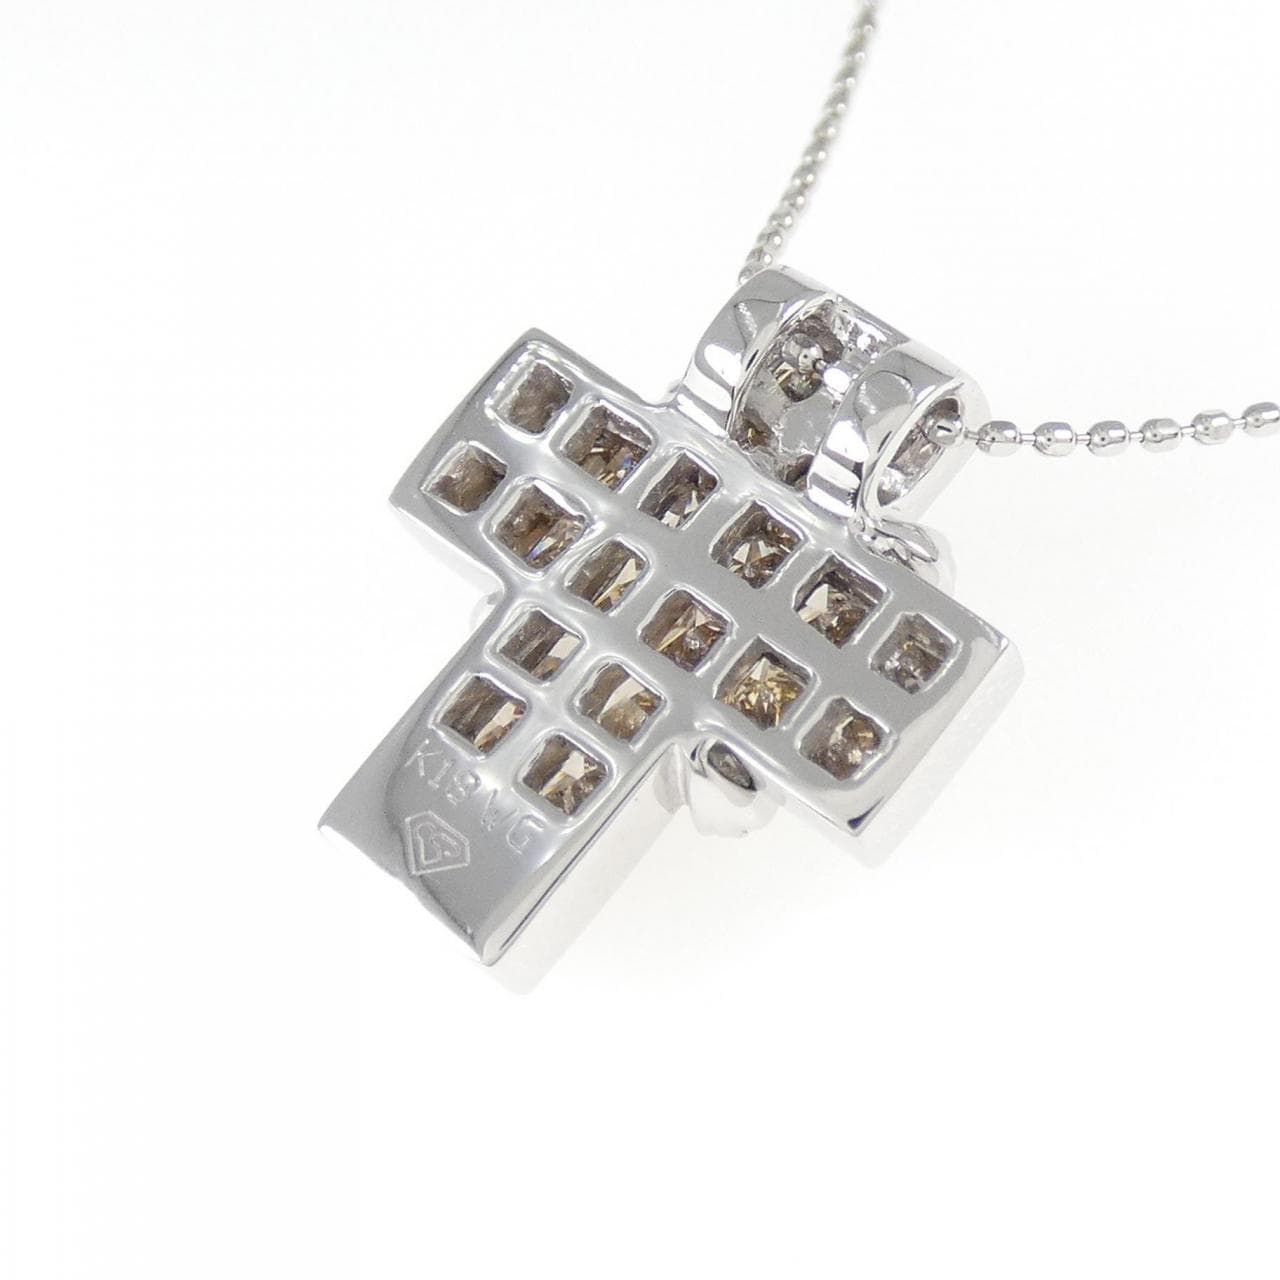 K18WG cross Diamond necklace